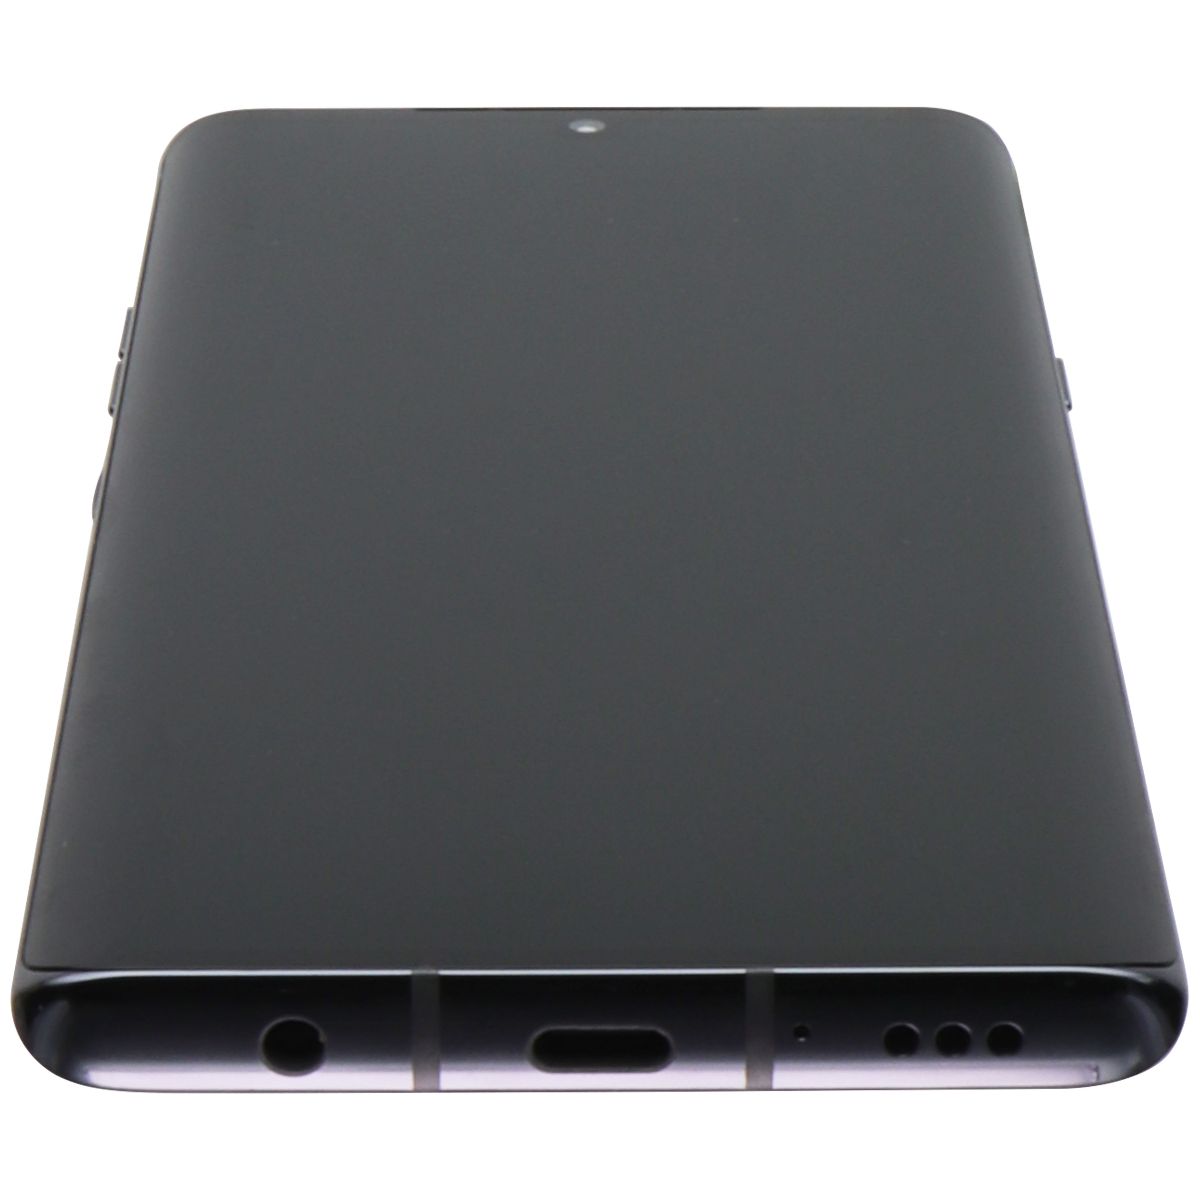 DEMO MODEL - LG Velvet (6.8-inch) Smartphone LM-G900V Wi-Fi 128GB / Black Cell Phones & Smartphones LG    - Simple Cell Bulk Wholesale Pricing - USA Seller